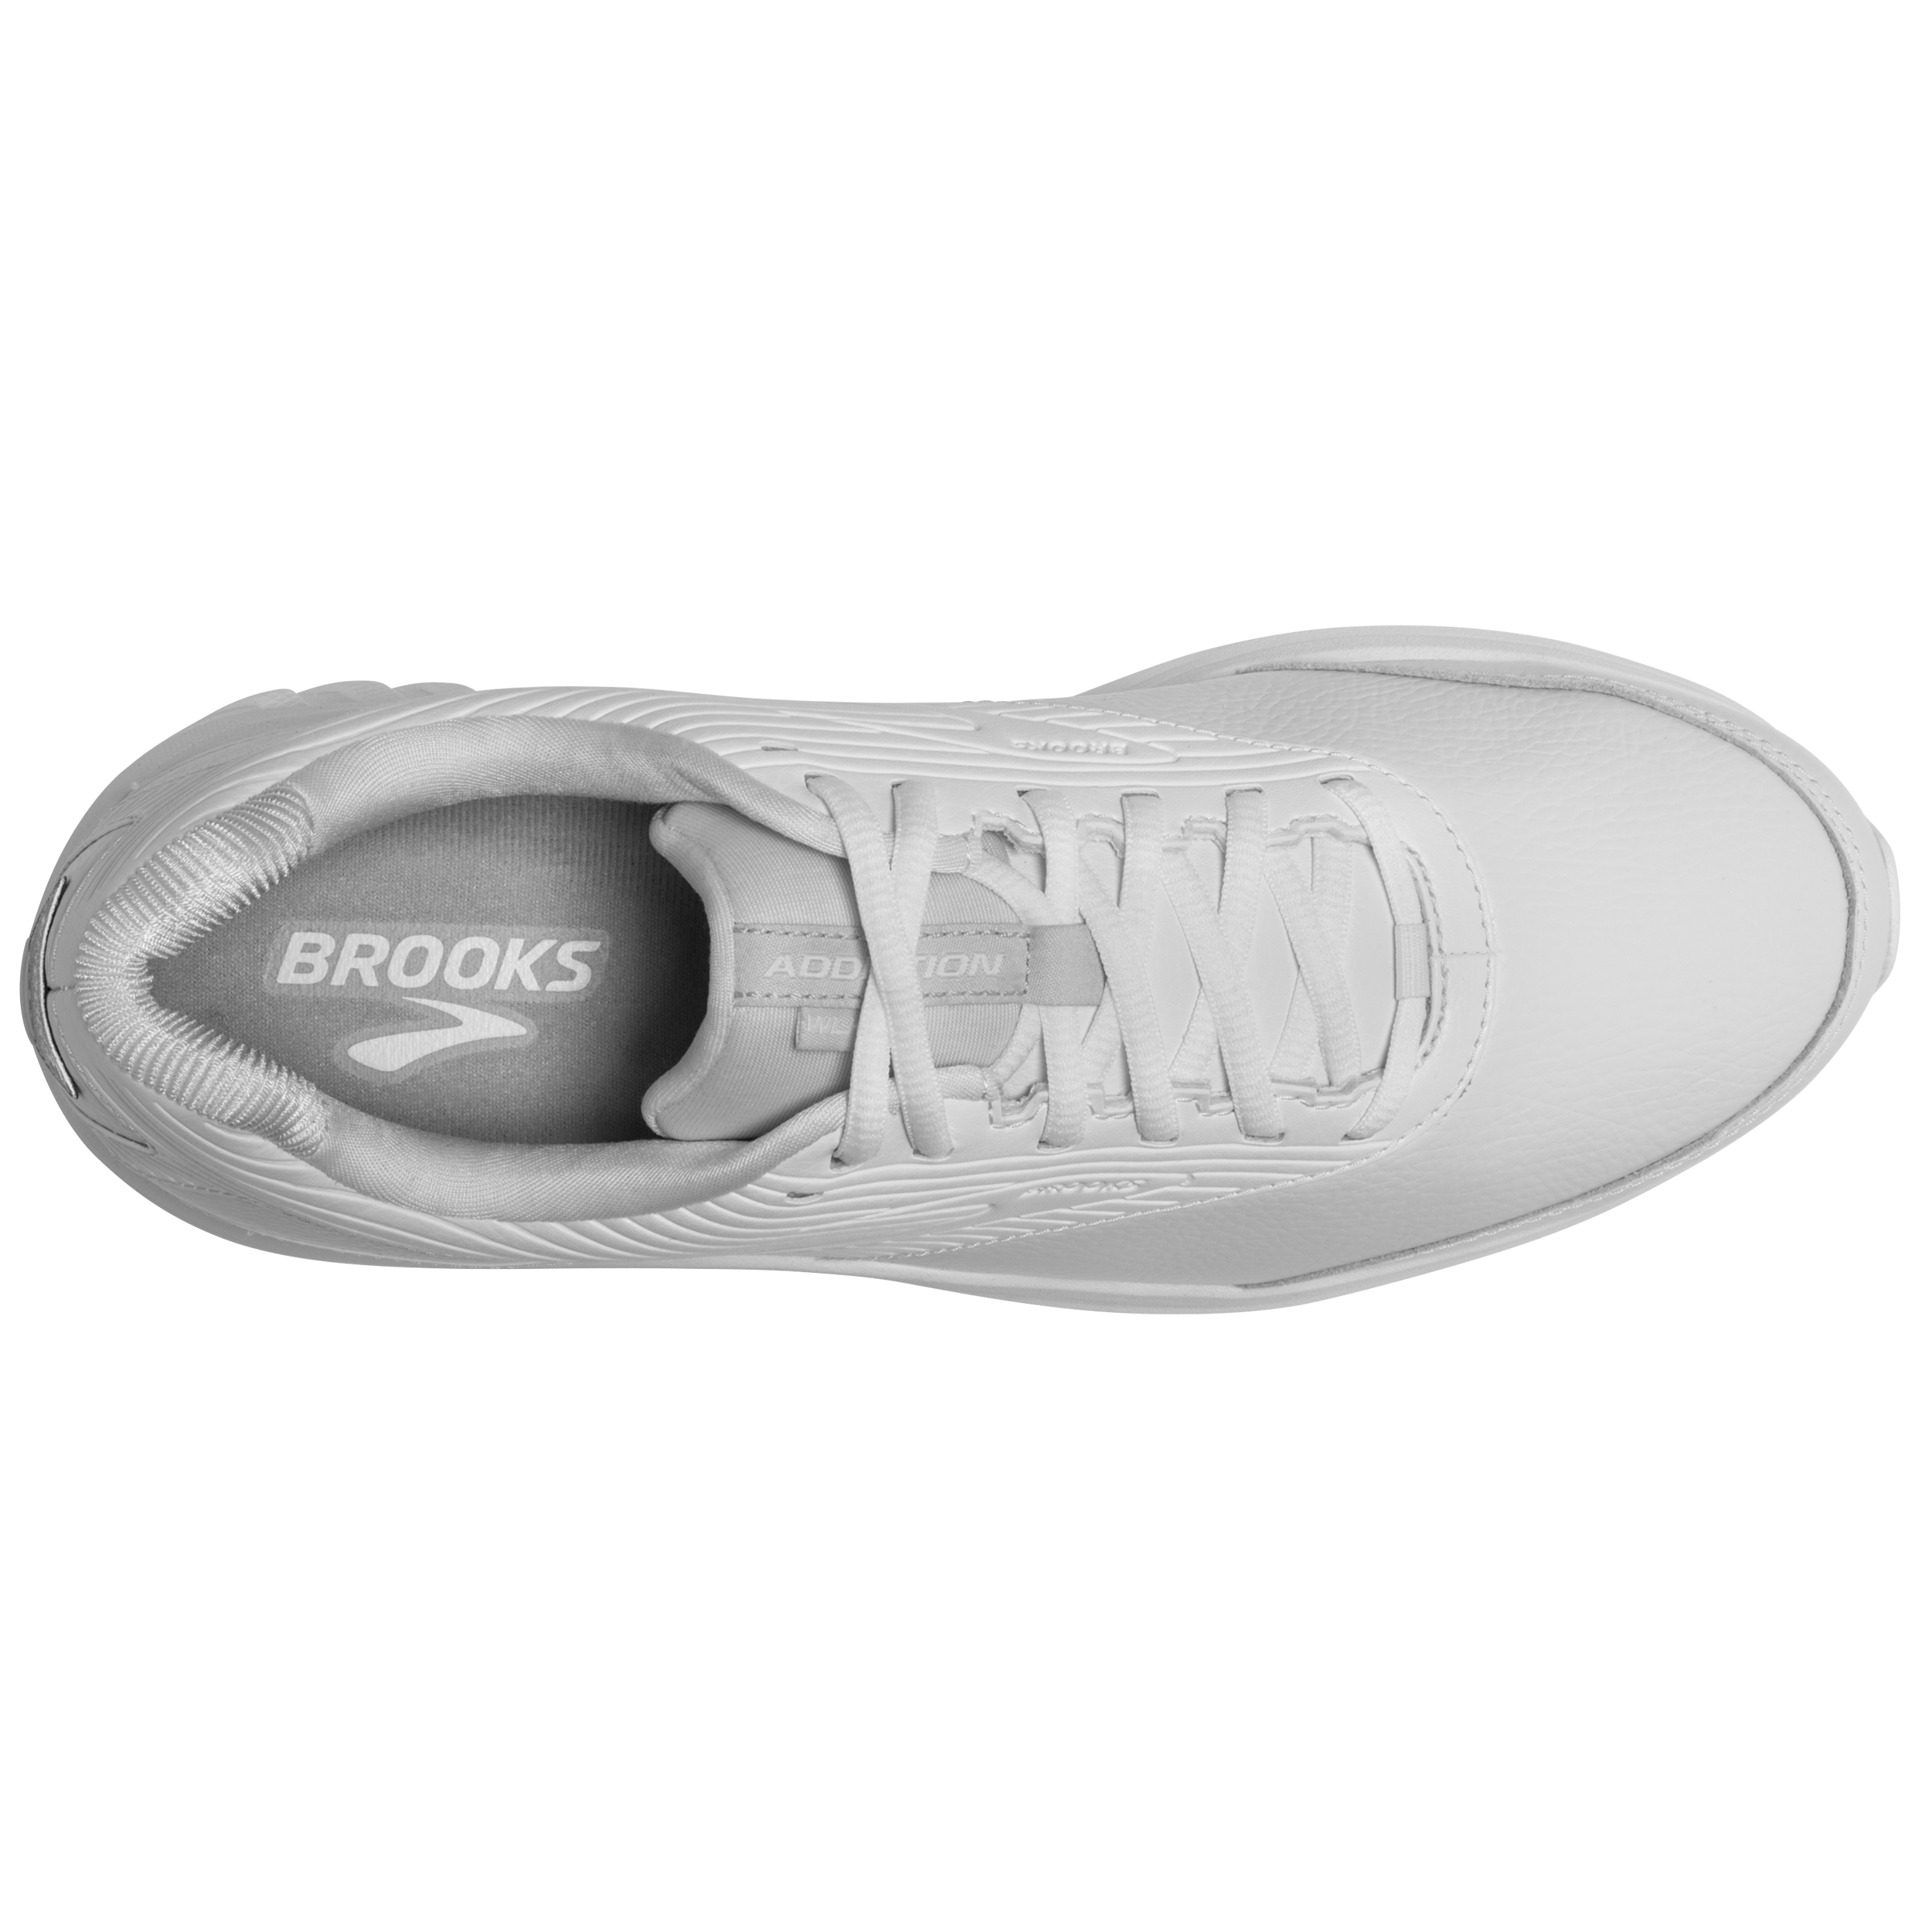 Brooks Addiction Walker Men's Size 10 D wide White Leather Shoes 